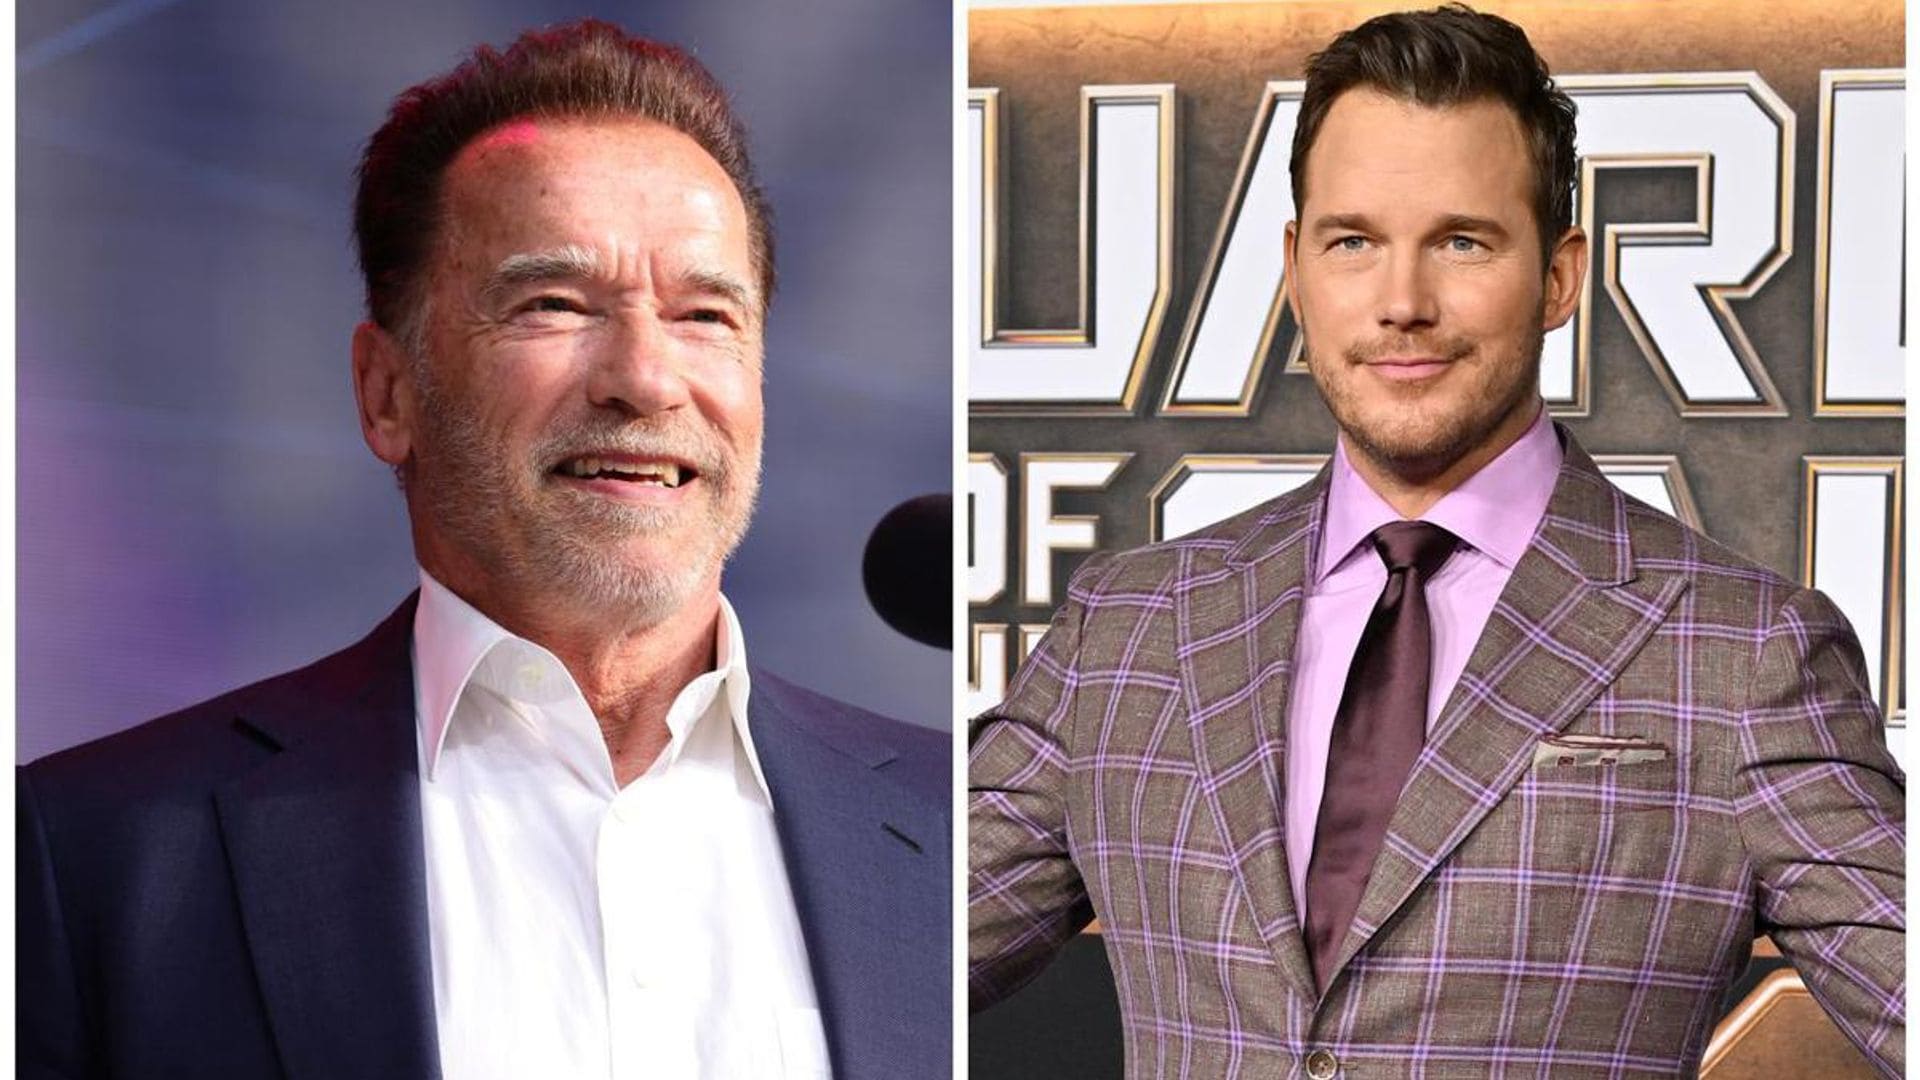 Arnold Schwarzenegger says he’s ‘very proud’ of son in law Chris Pratt